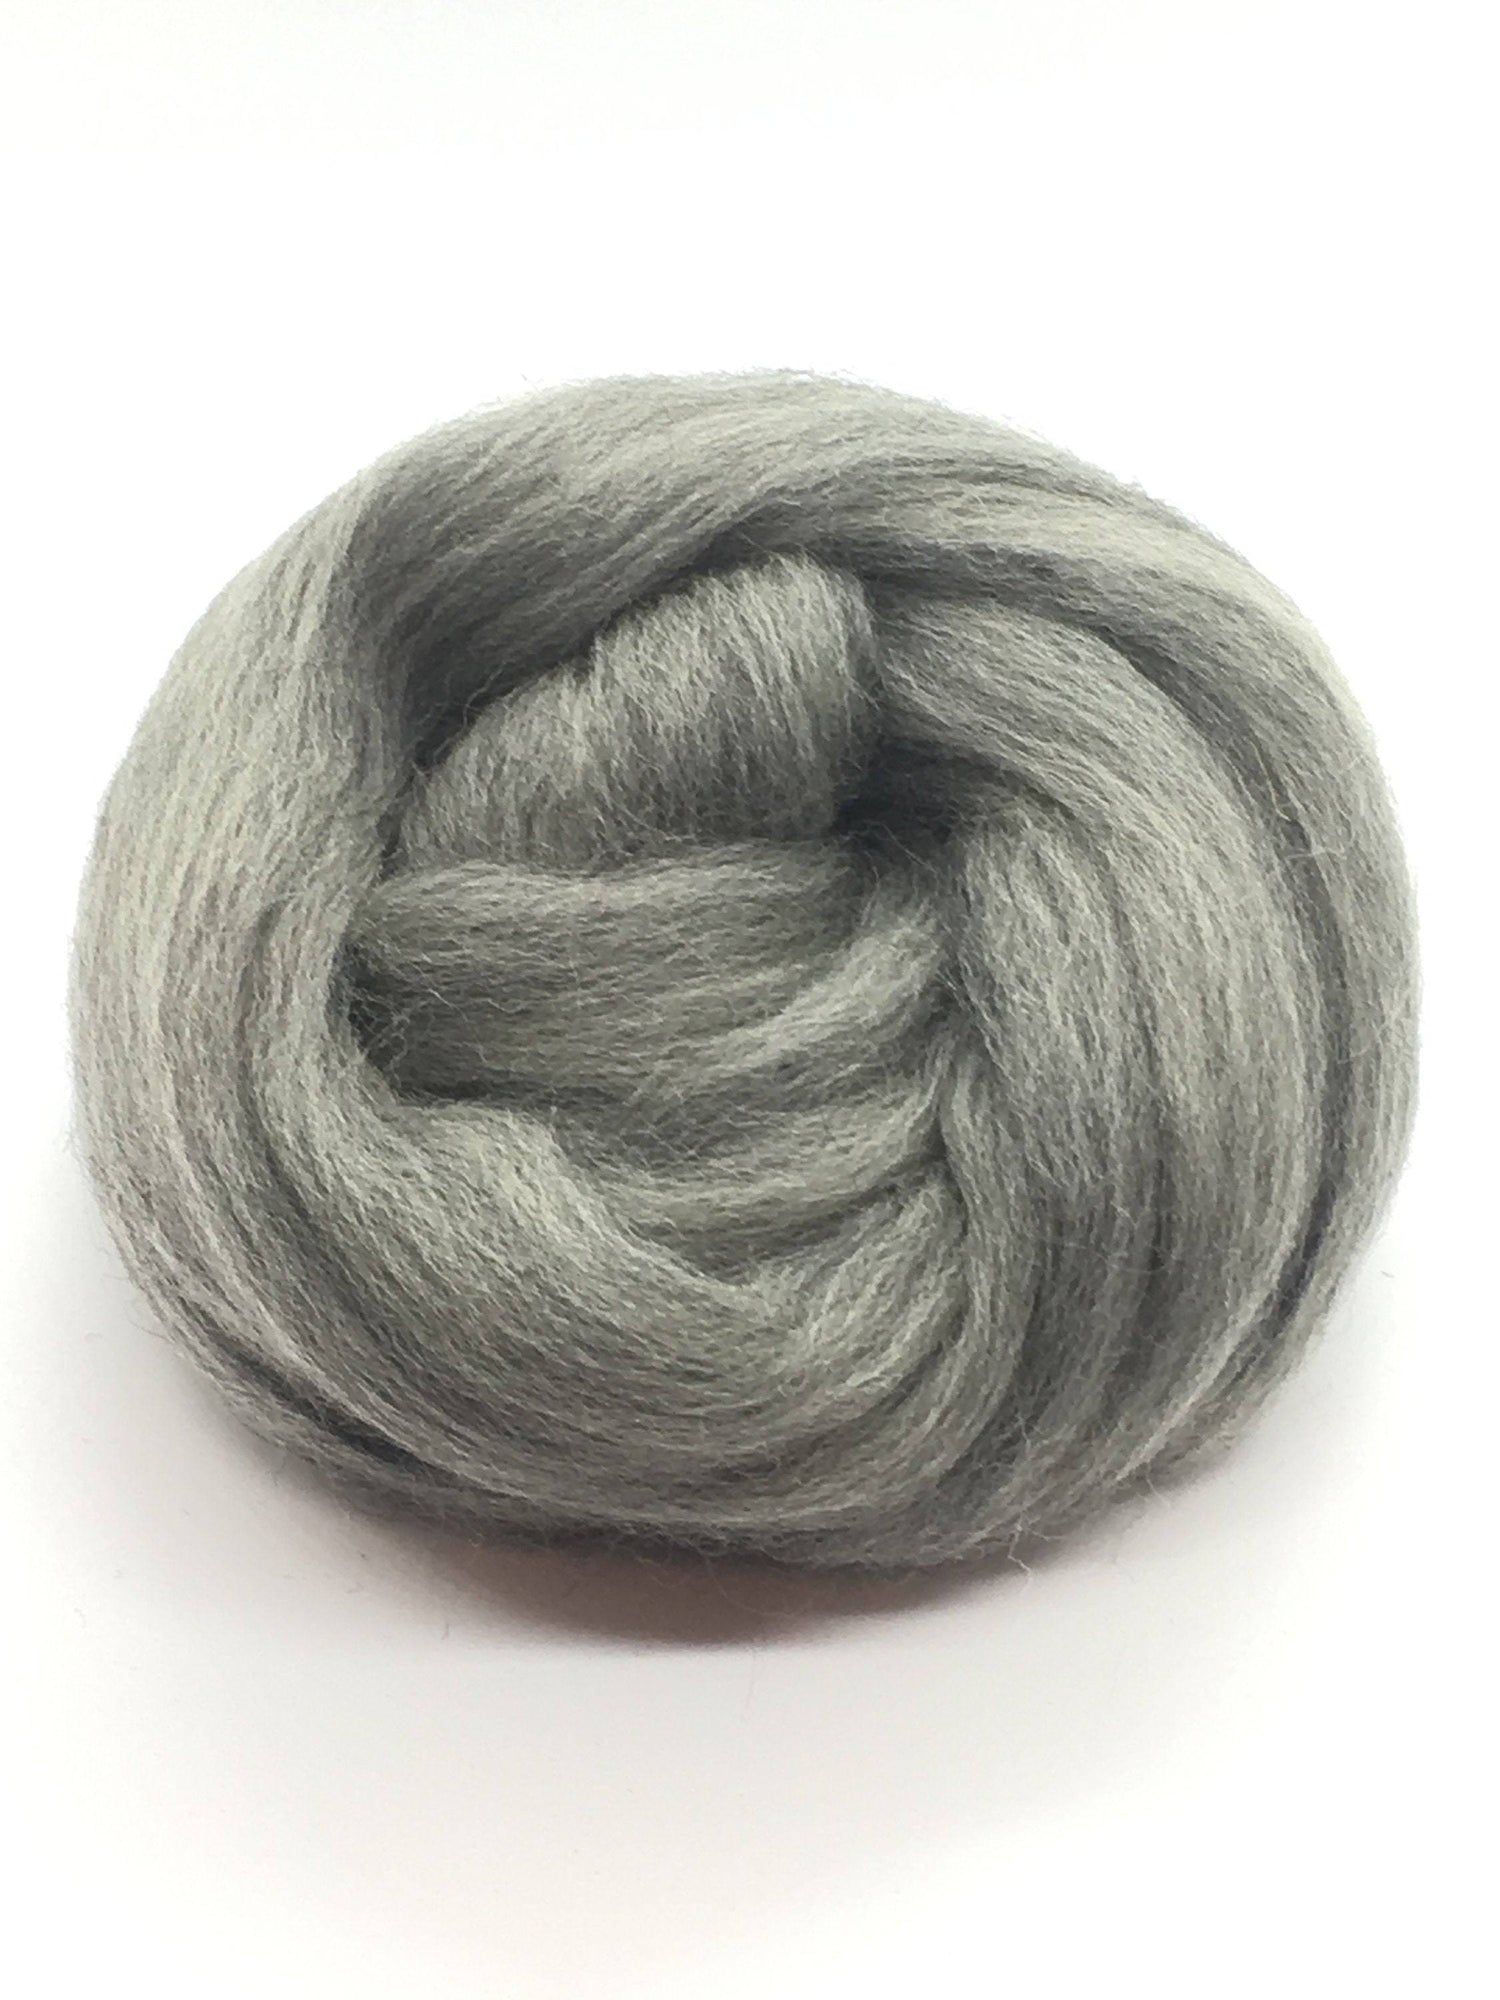 1 oz. Dark Gray Wool Roving